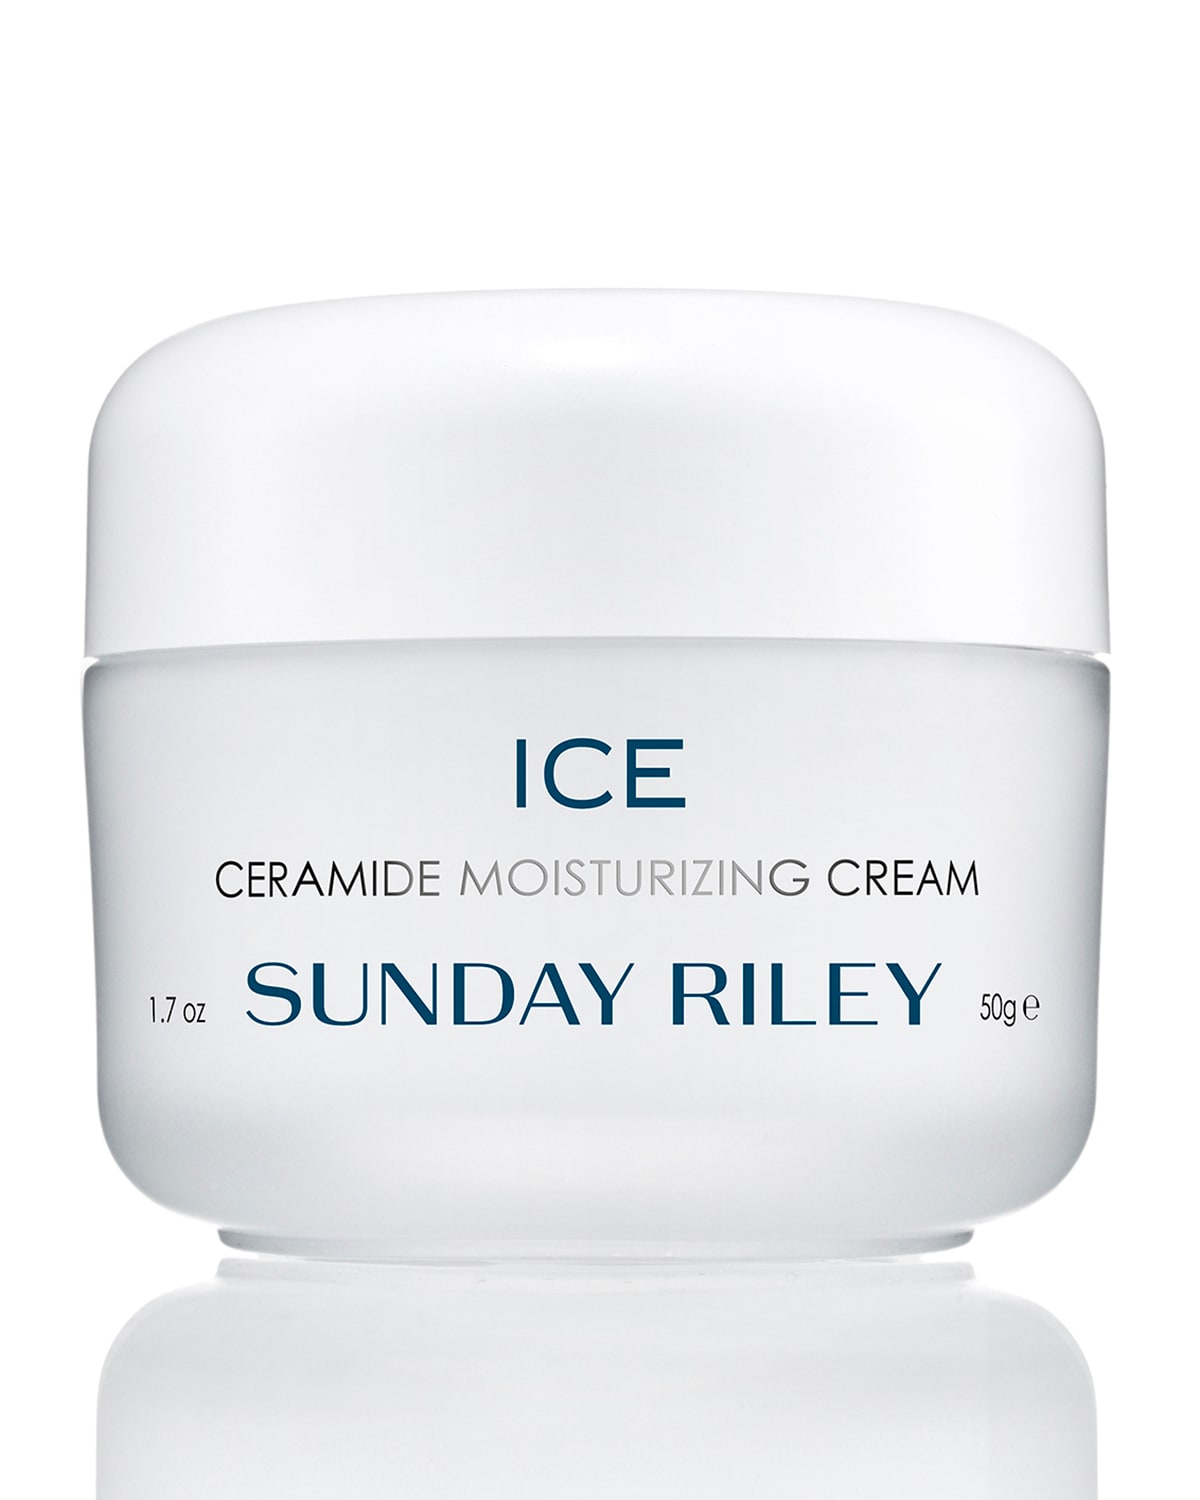 ICE Ceramide Moisturizing Cream, 1.76 oz. / 50 g